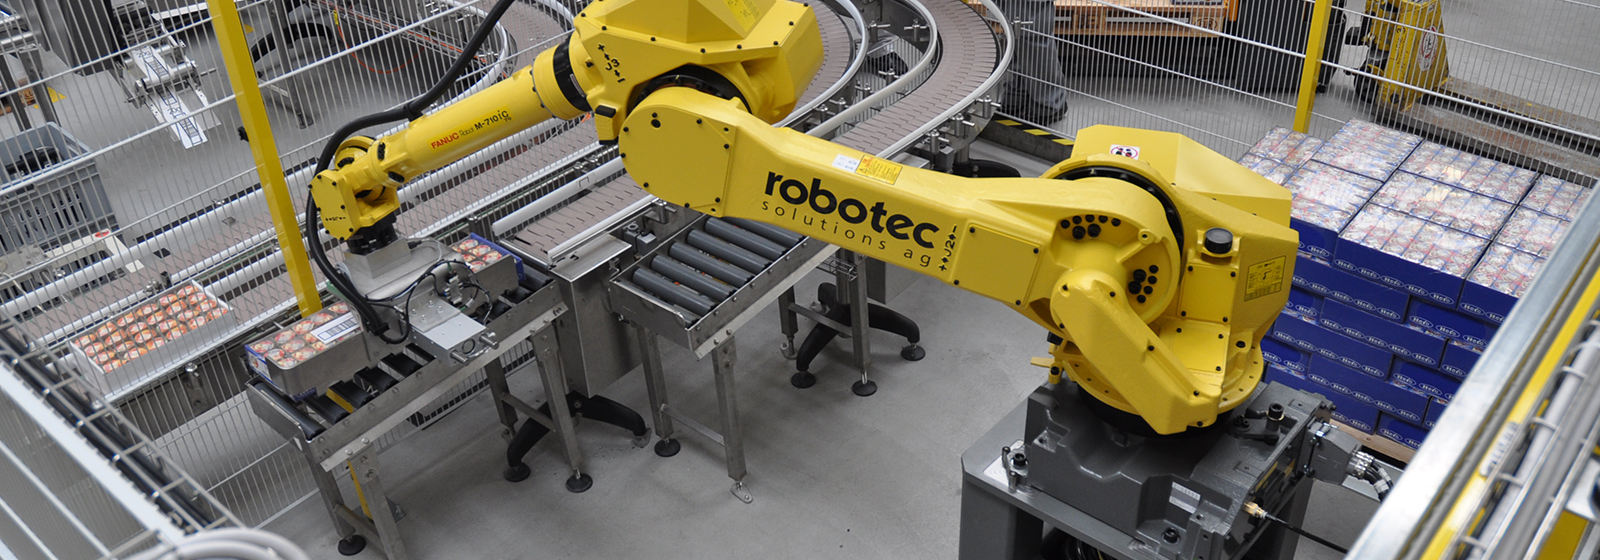 Robot M-710iC placing food carriers onto conveyor belt